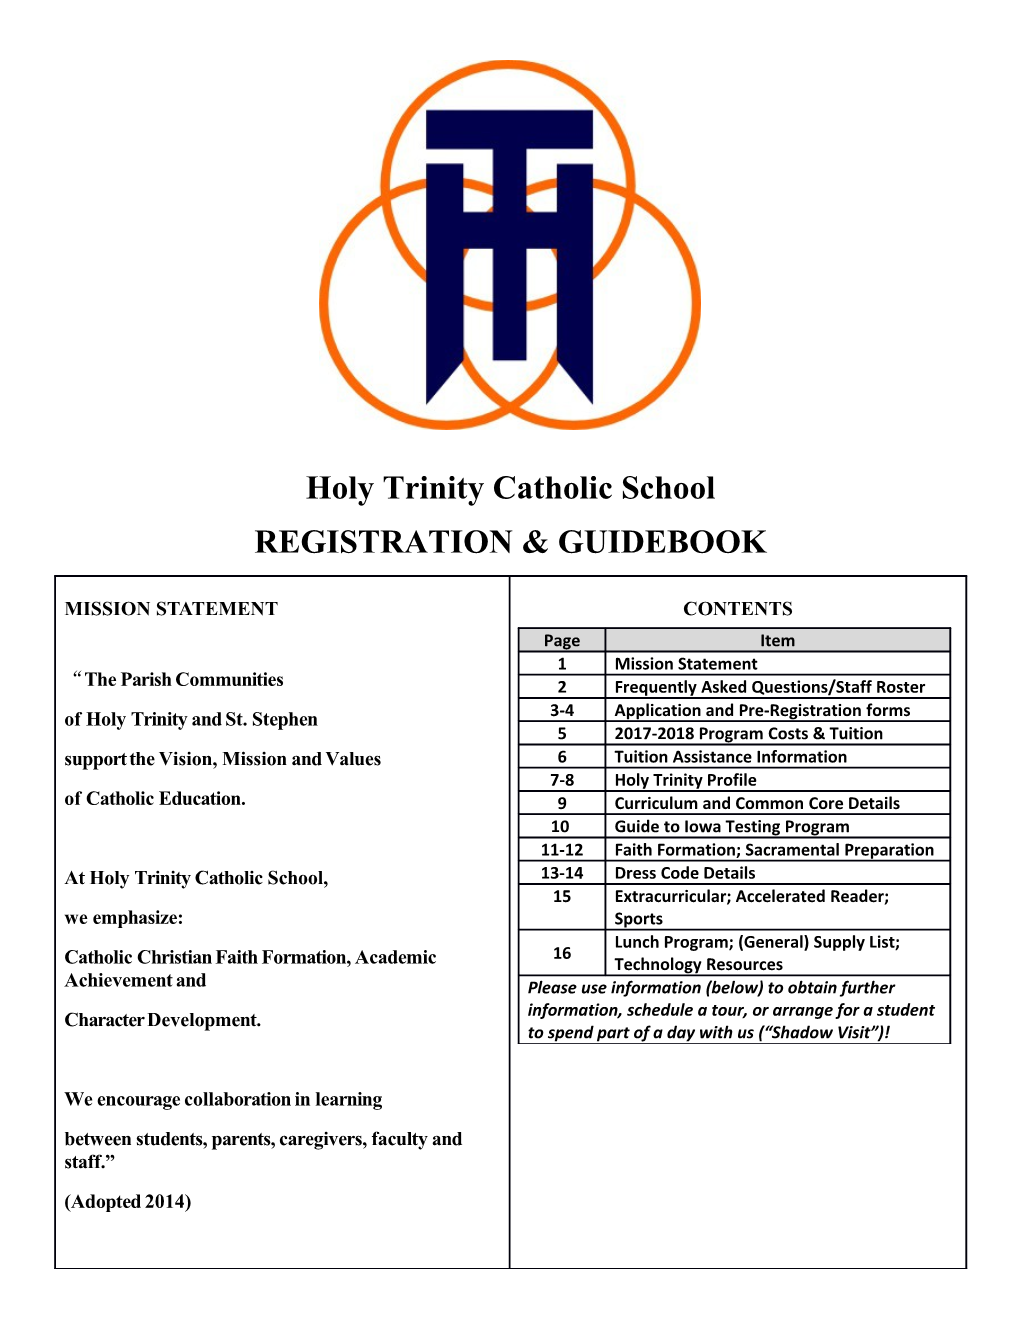 Holy Trinity Catholic School s2